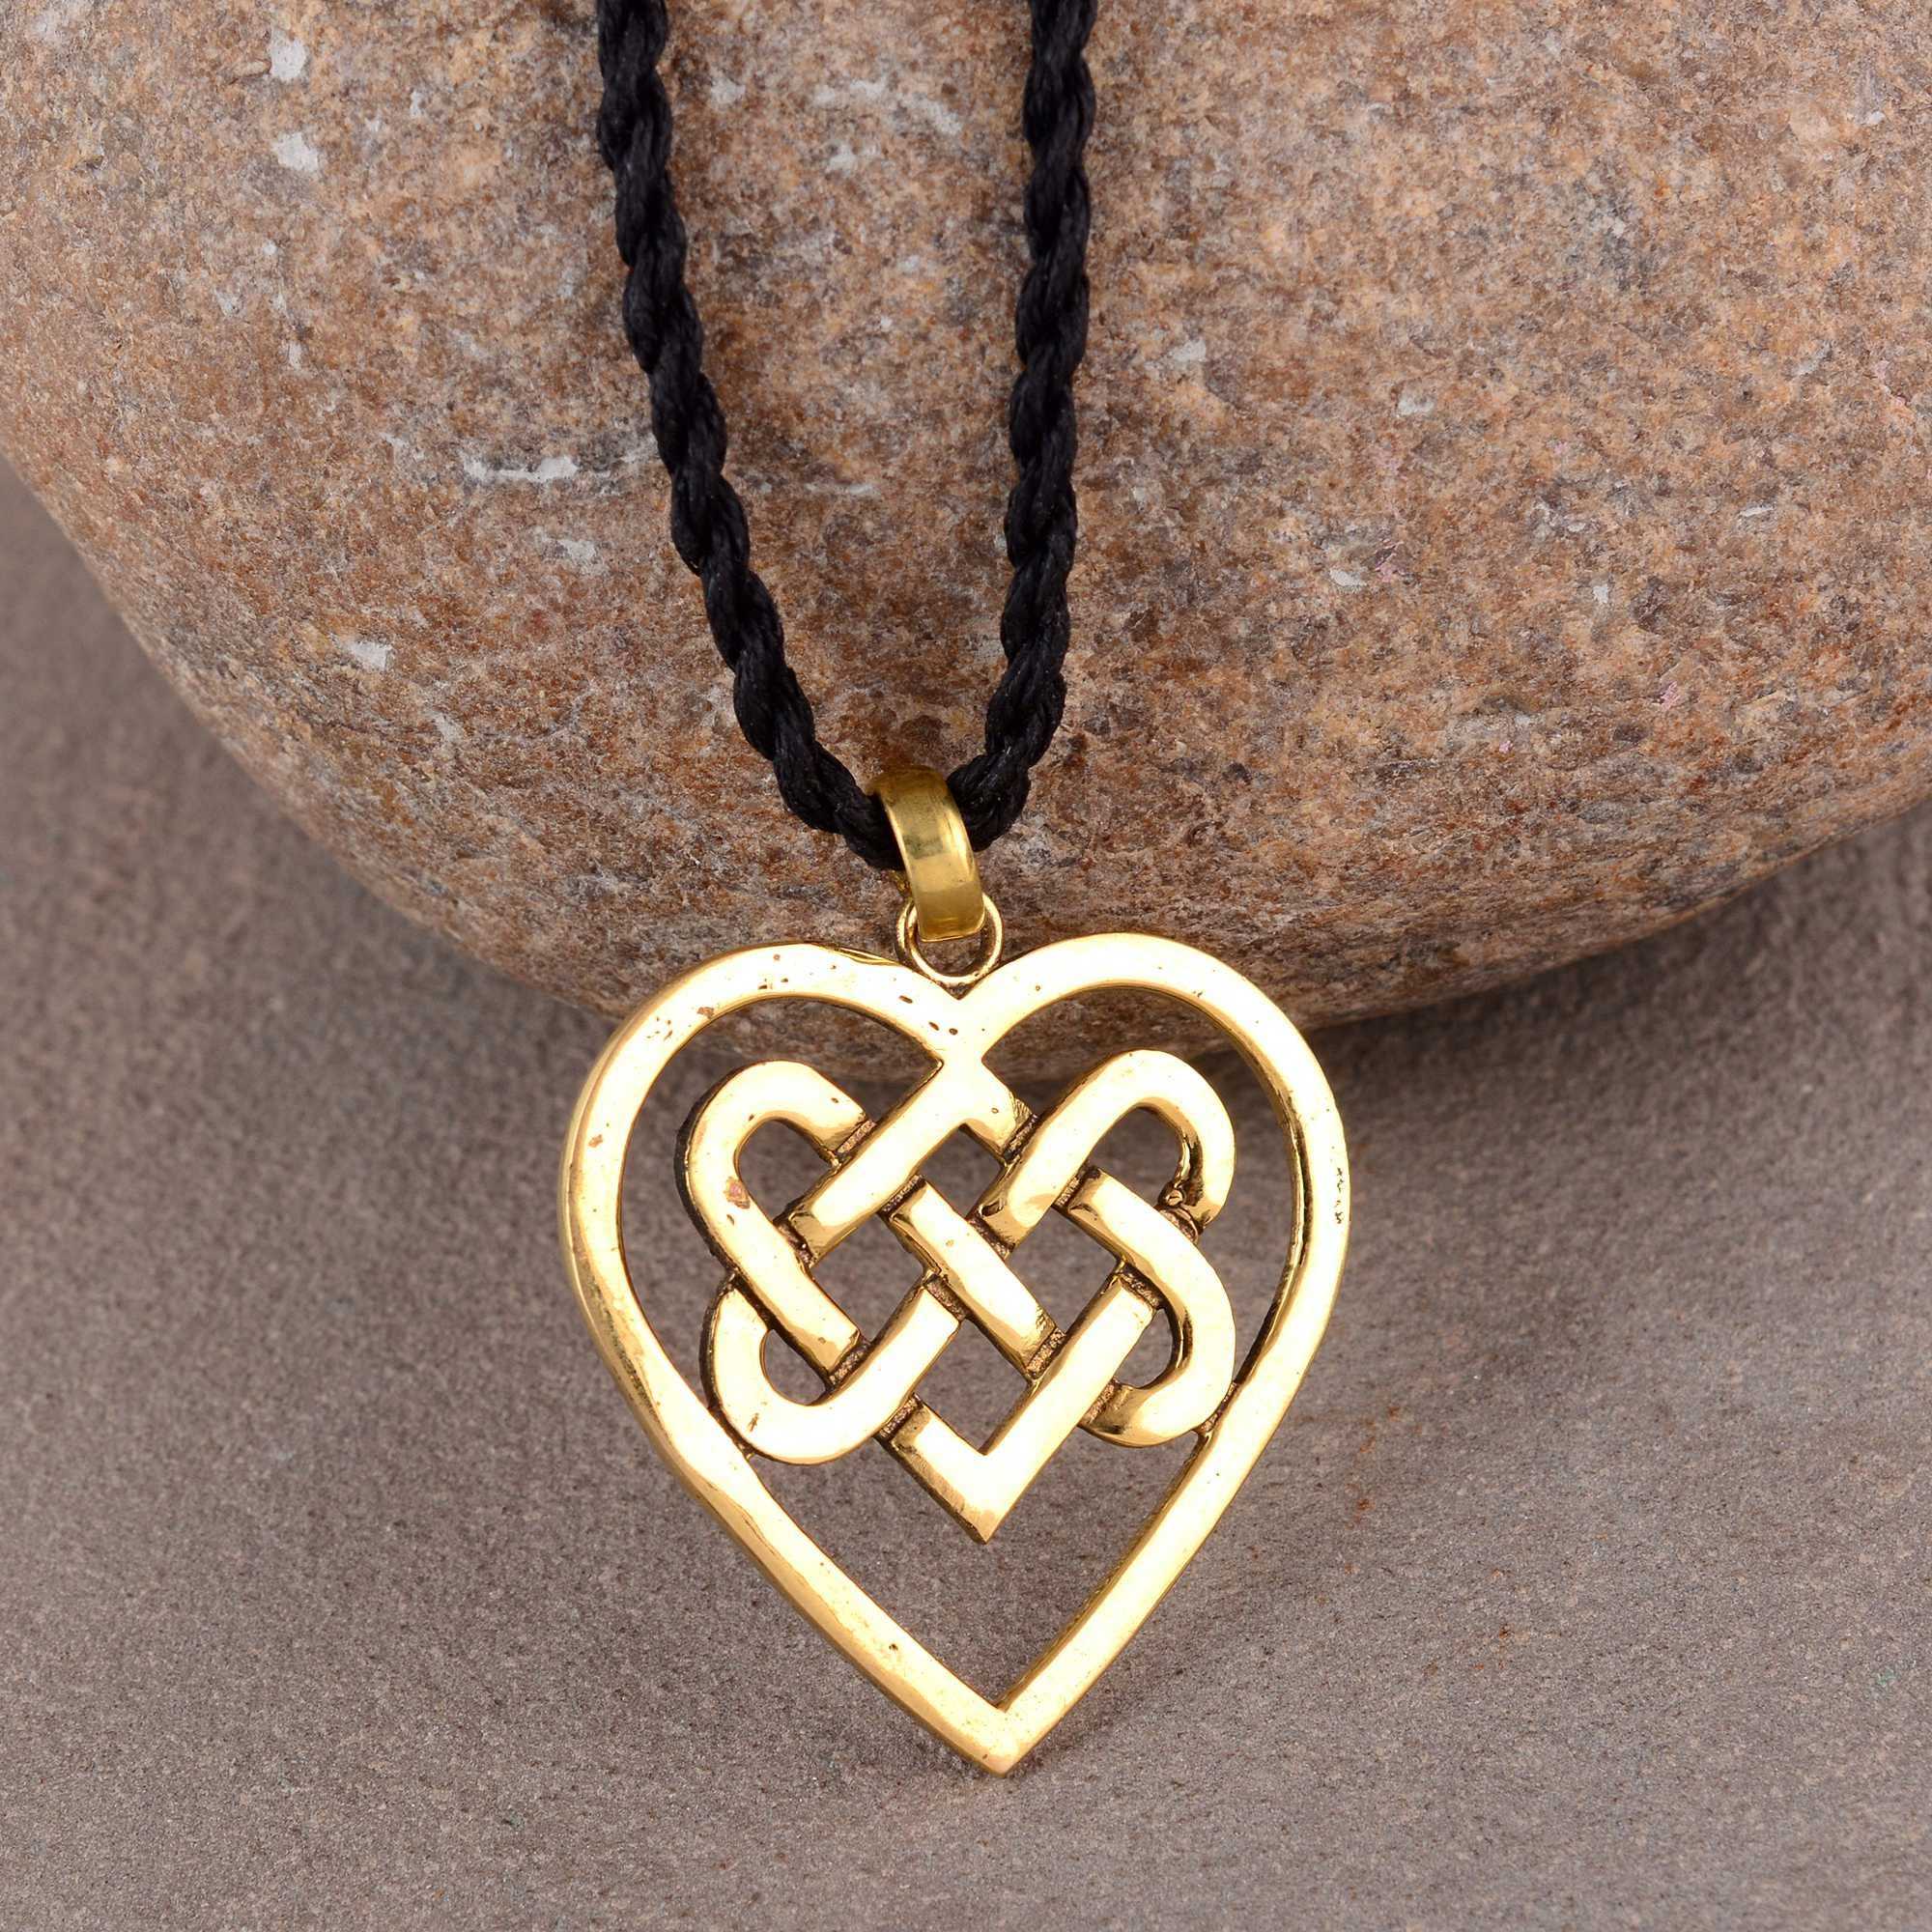 Diamond White Gold Infinity Celtic Trinity Knot Heart Necklace